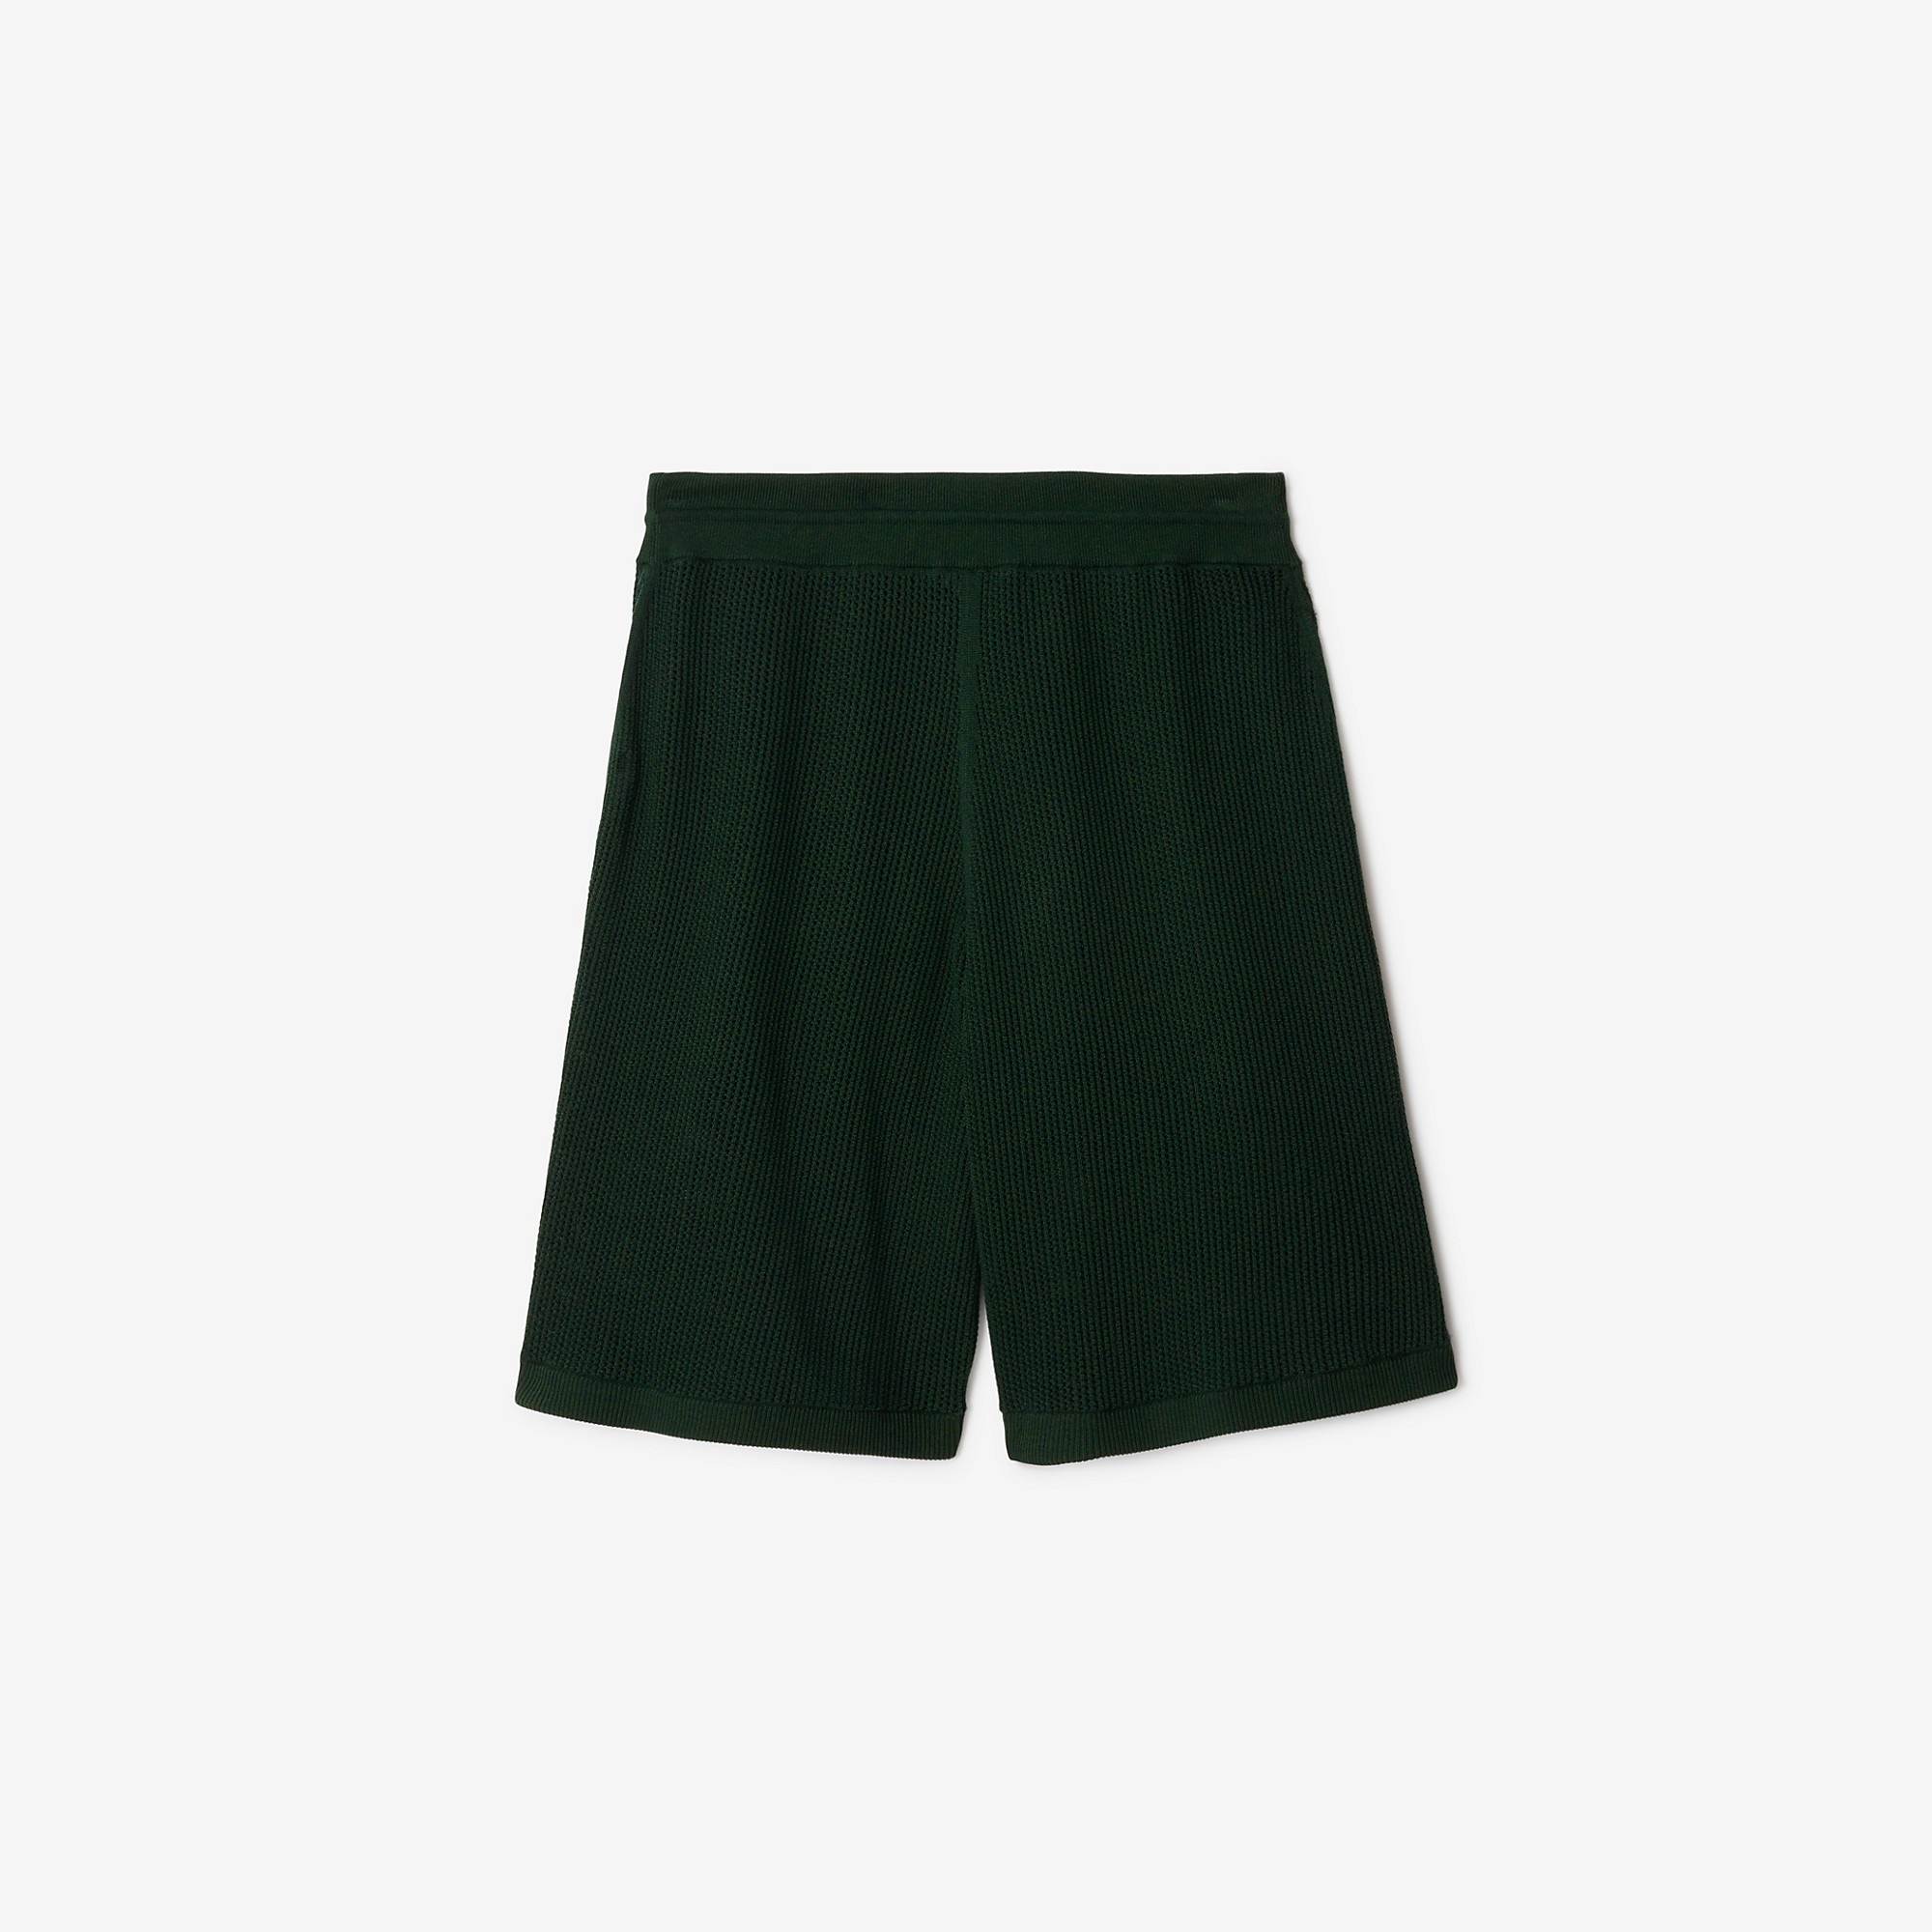 Cotton Mesh Shorts - 5